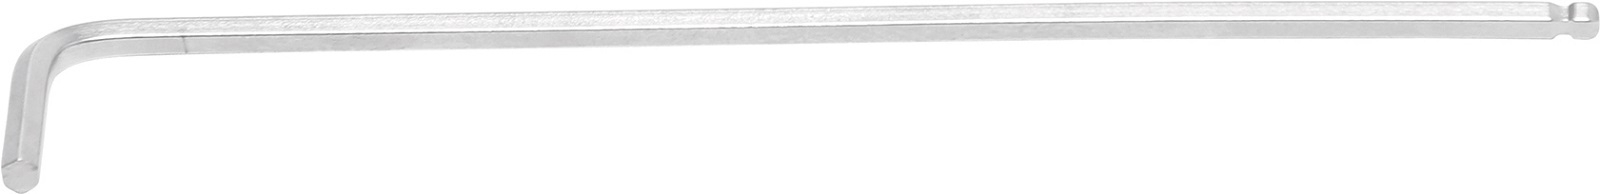 Winkelschlüssel | extra lang | Innensechskant/Innensechskant mit Kugelkopf 3 mm - BGS 790-3